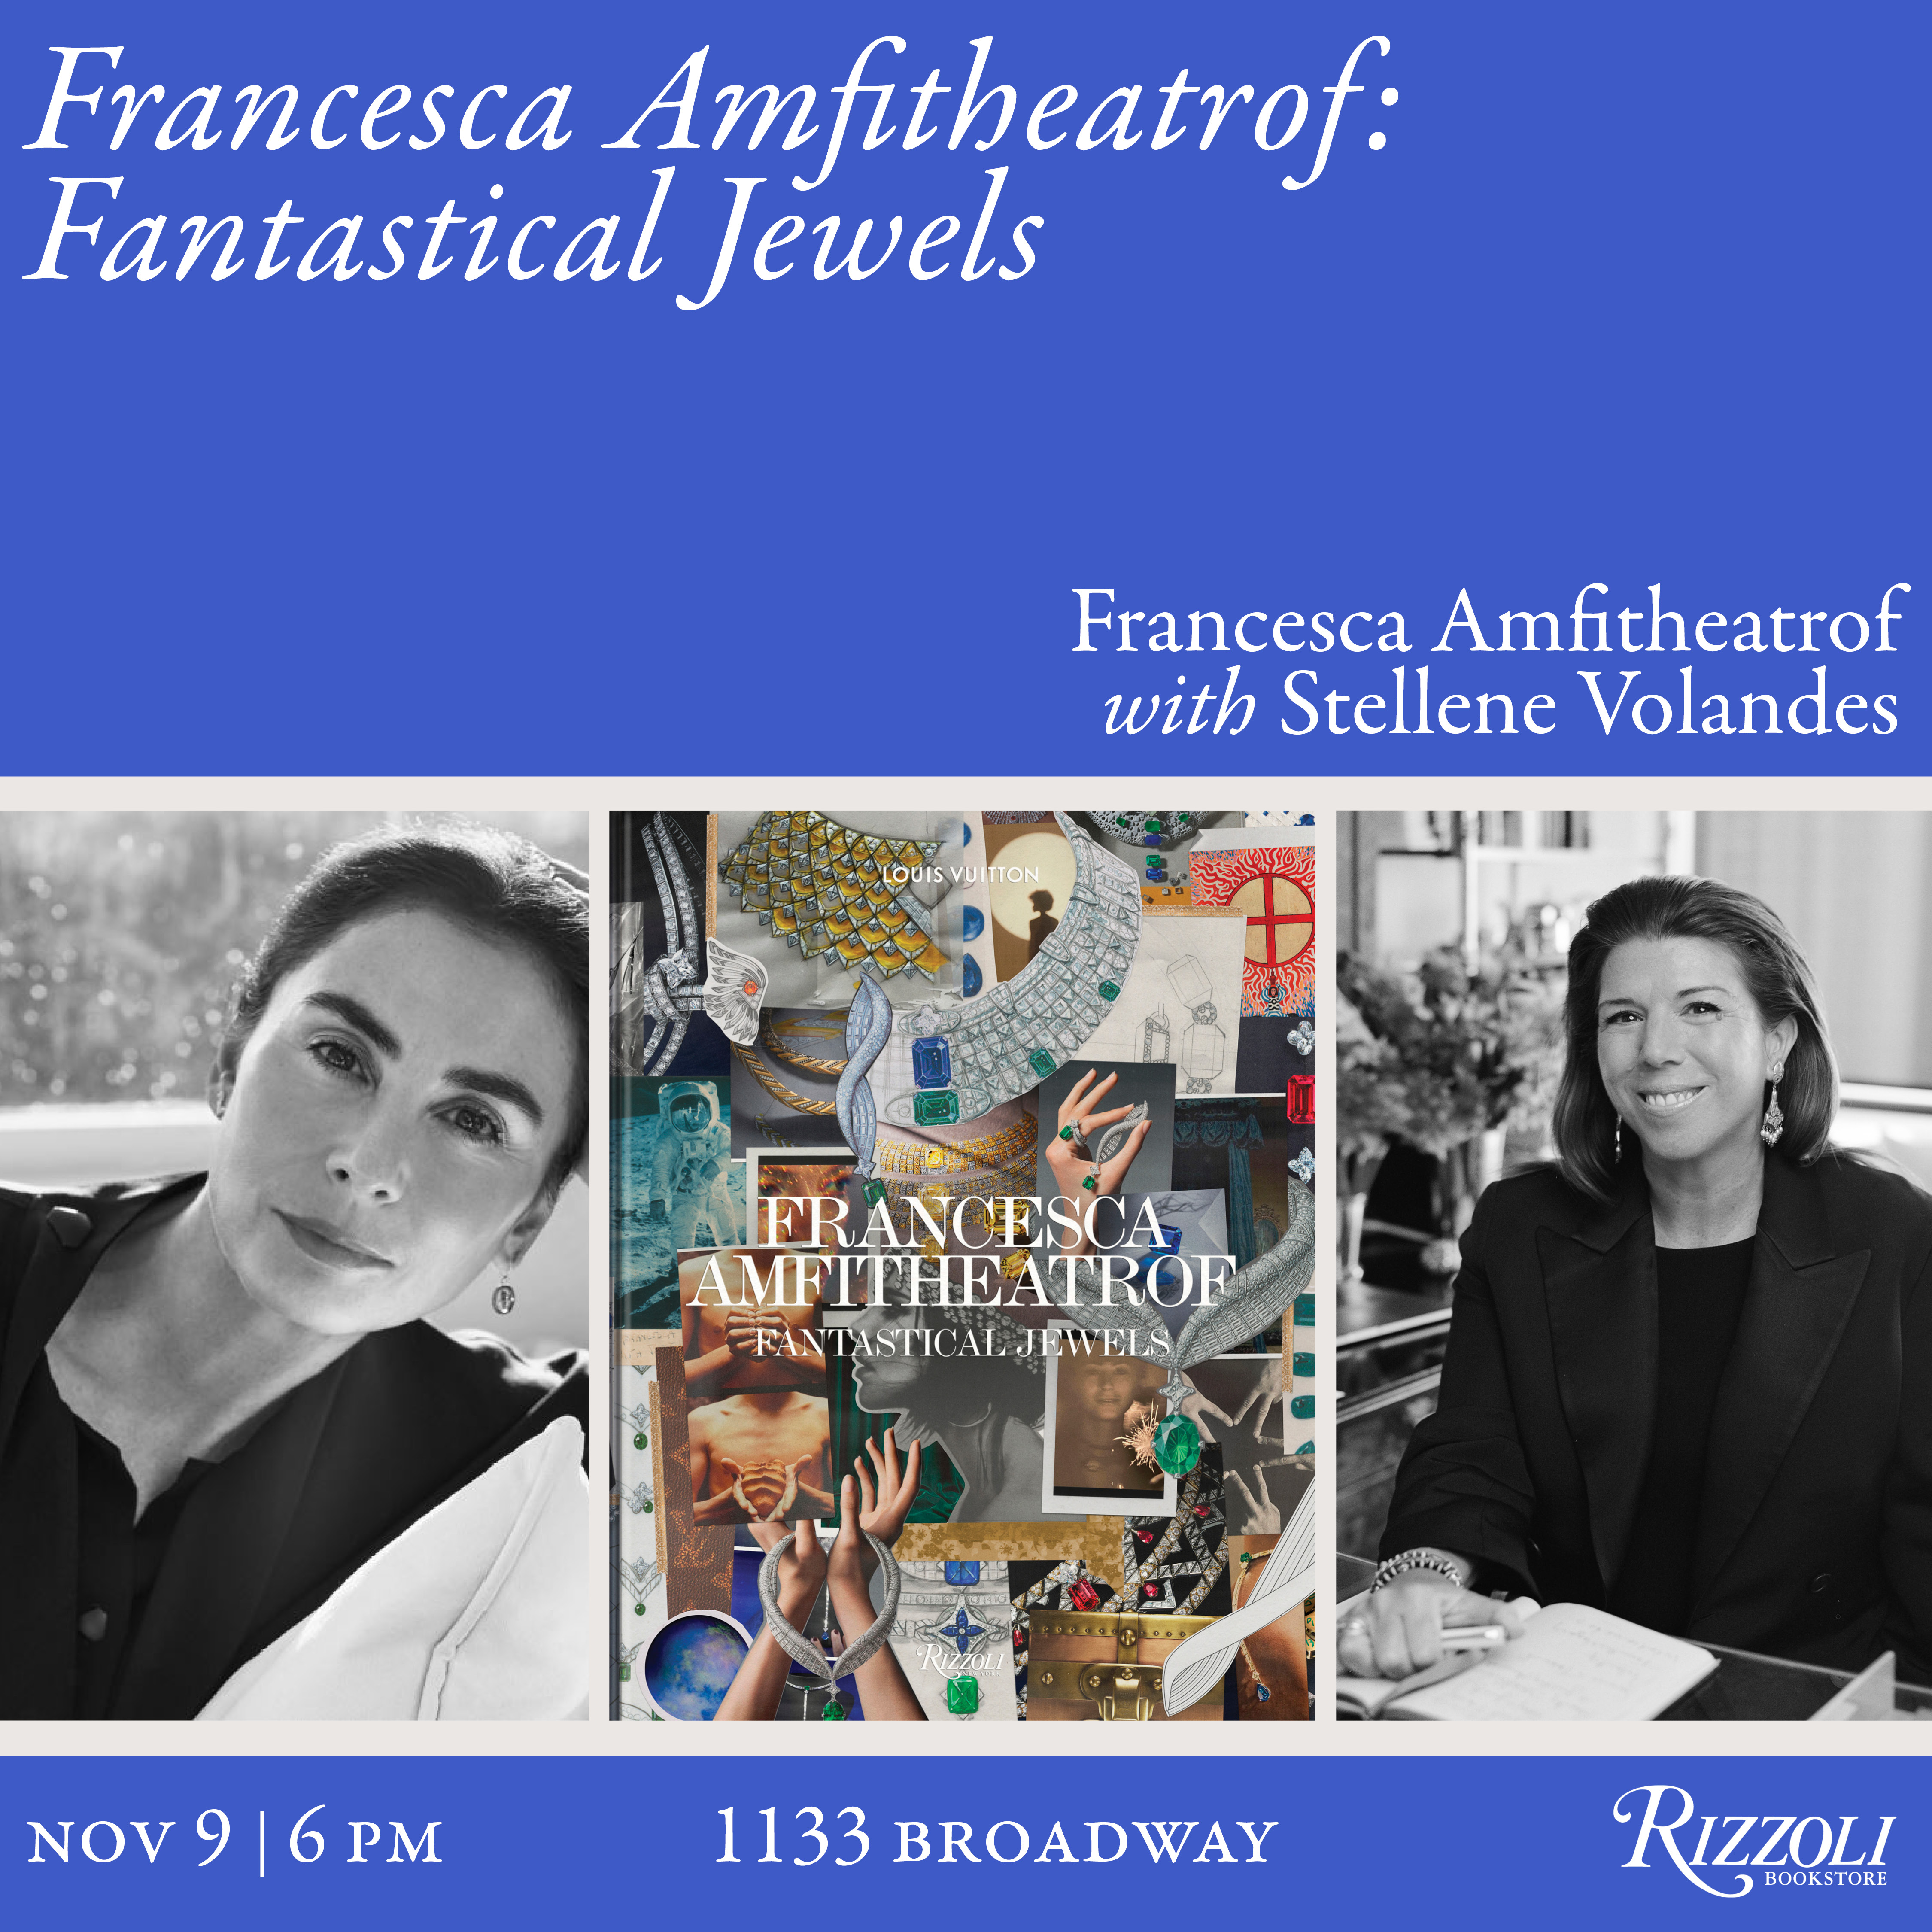 Francesca Amfitheatrof: Fantastical Jewels with Stellene Volandes Tickets,  Thu, Nov 9, 2023 at 6:00 PM